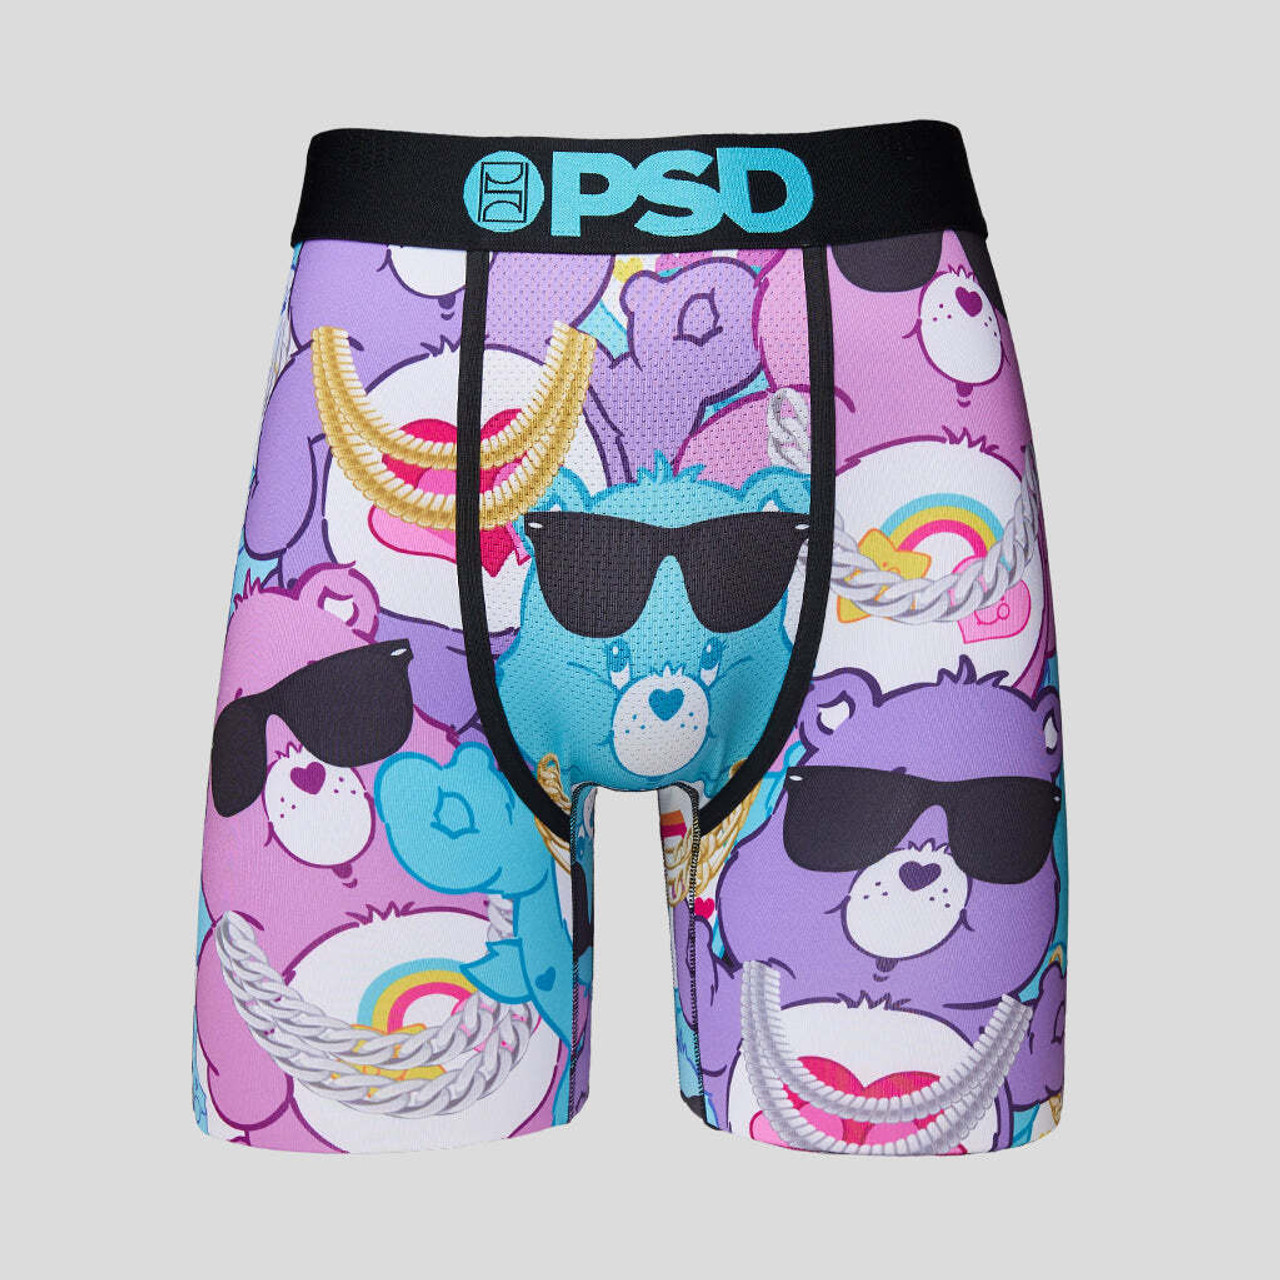 PSD Care Bearcation Bears Summer Pool Palm Tree Underwear Boxer Briefs  222180071